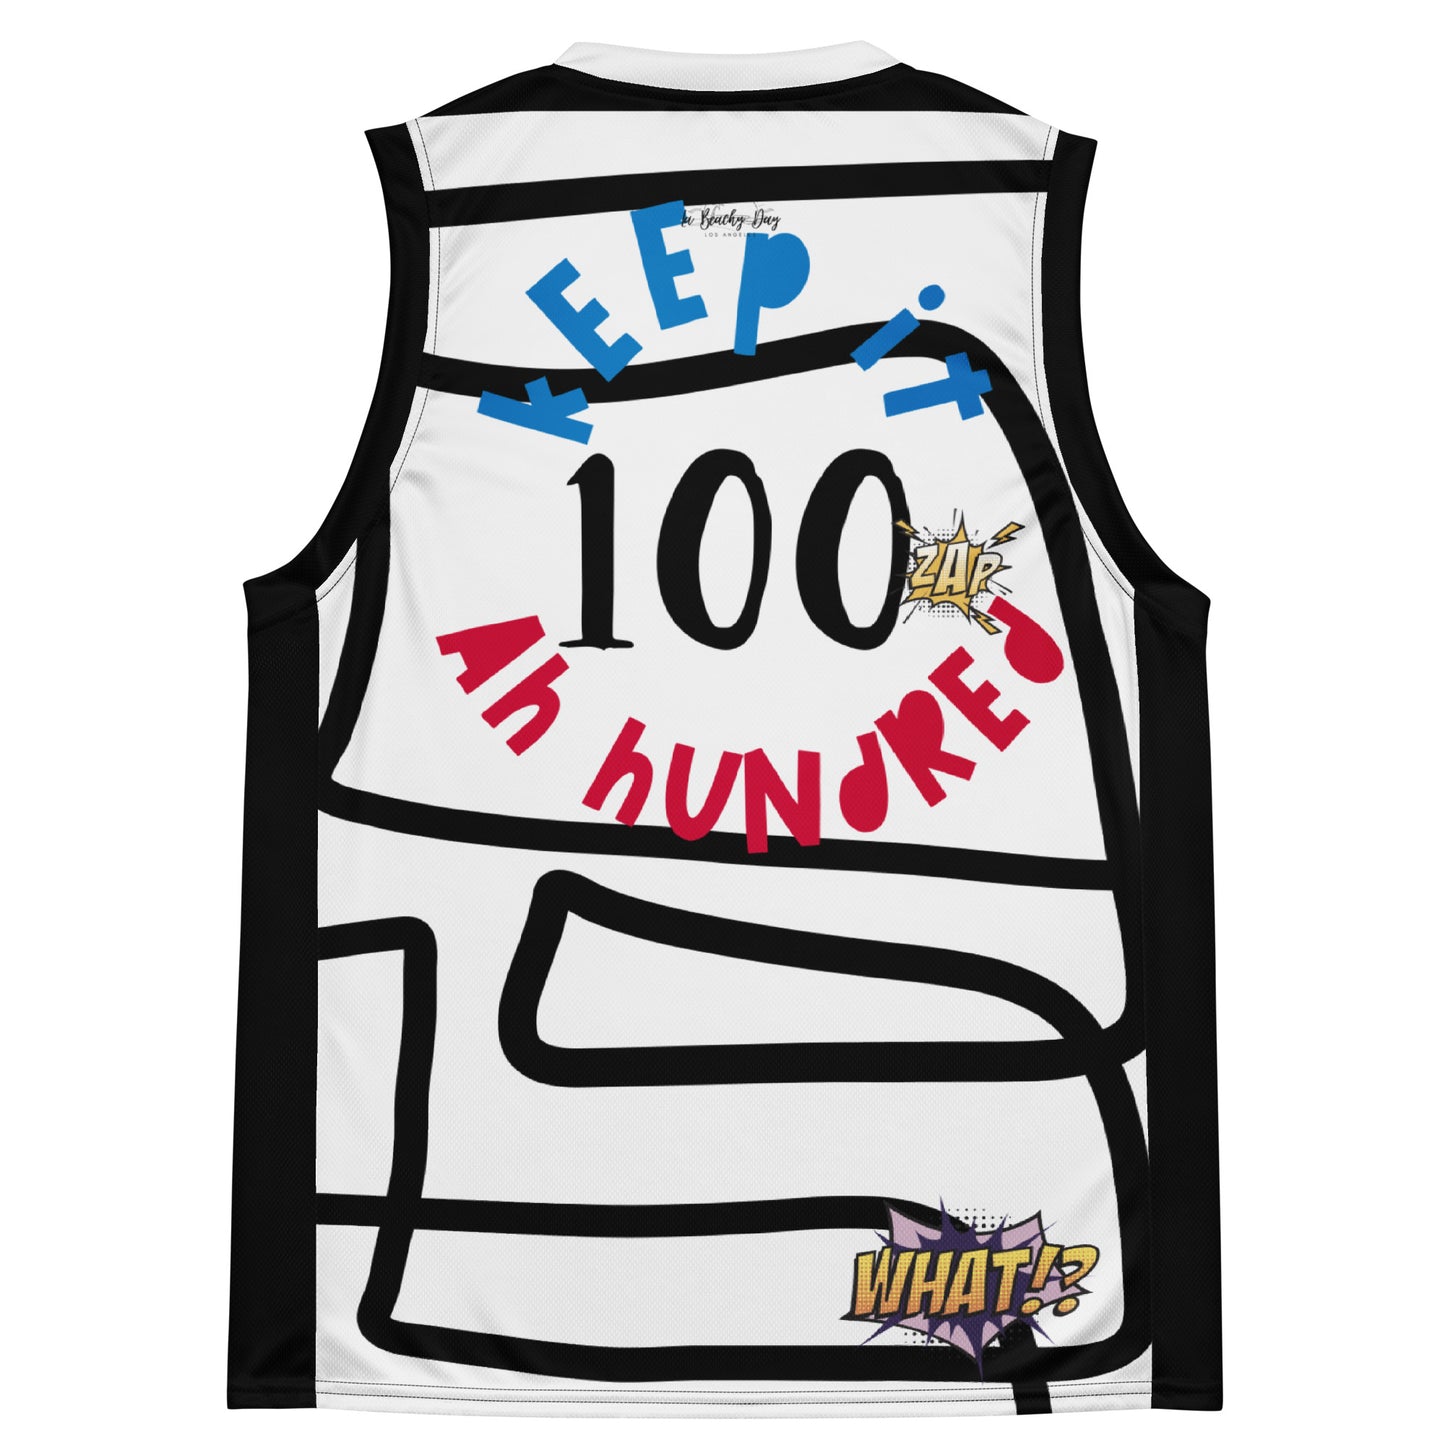 Keep it 100 Jersey (Unisex)